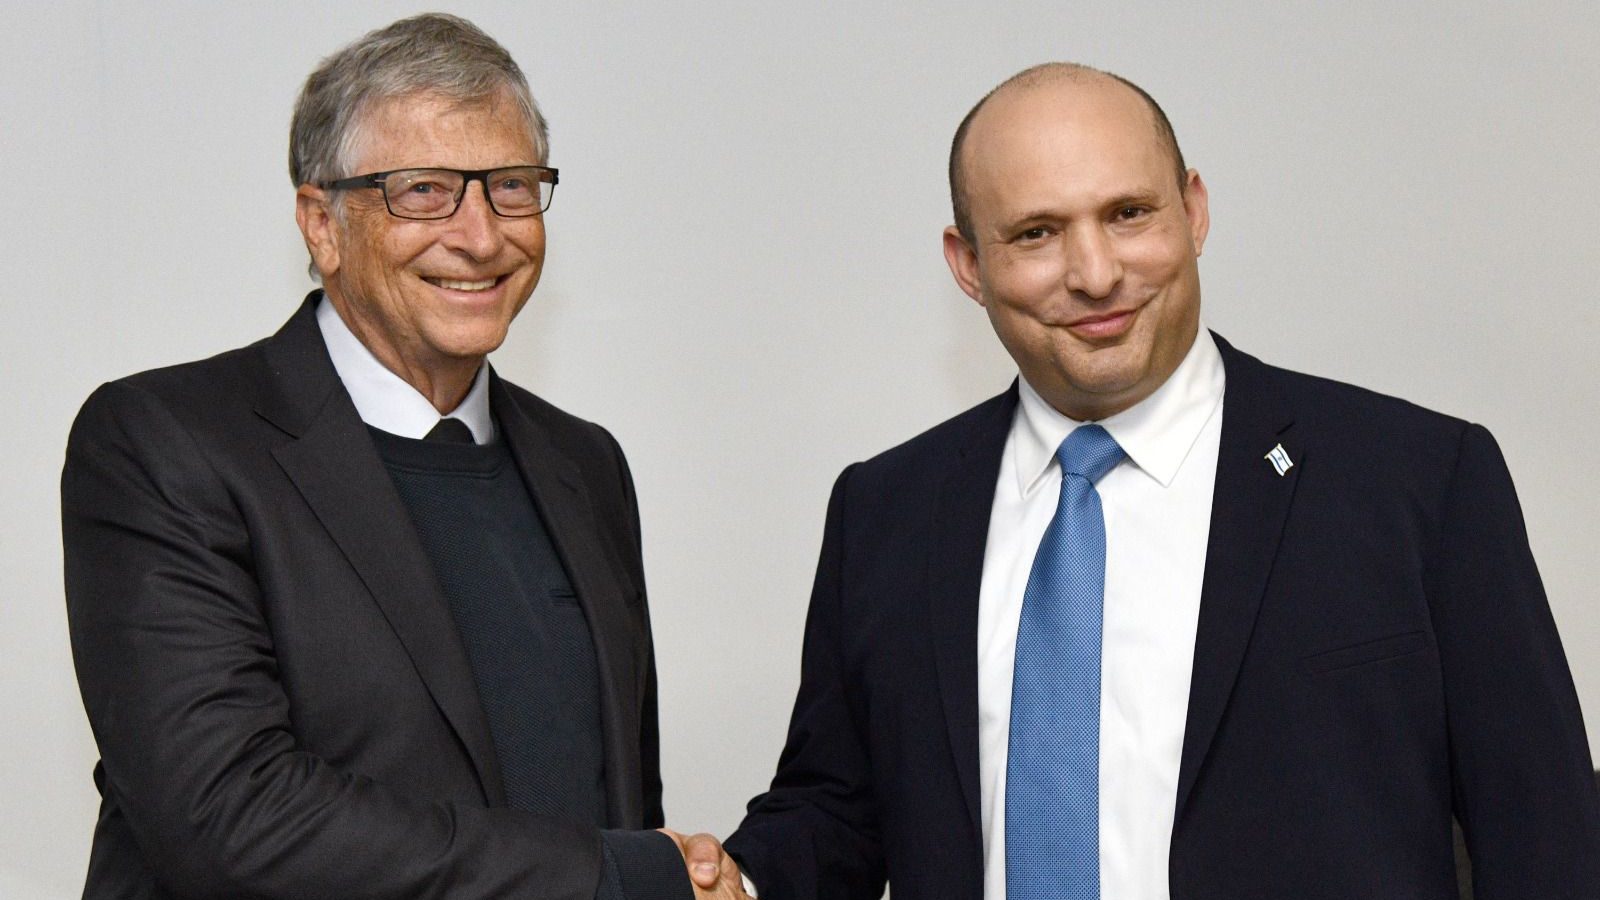 Bennett, Bill Gates Meet at Climate Change Confab, Form Working Group